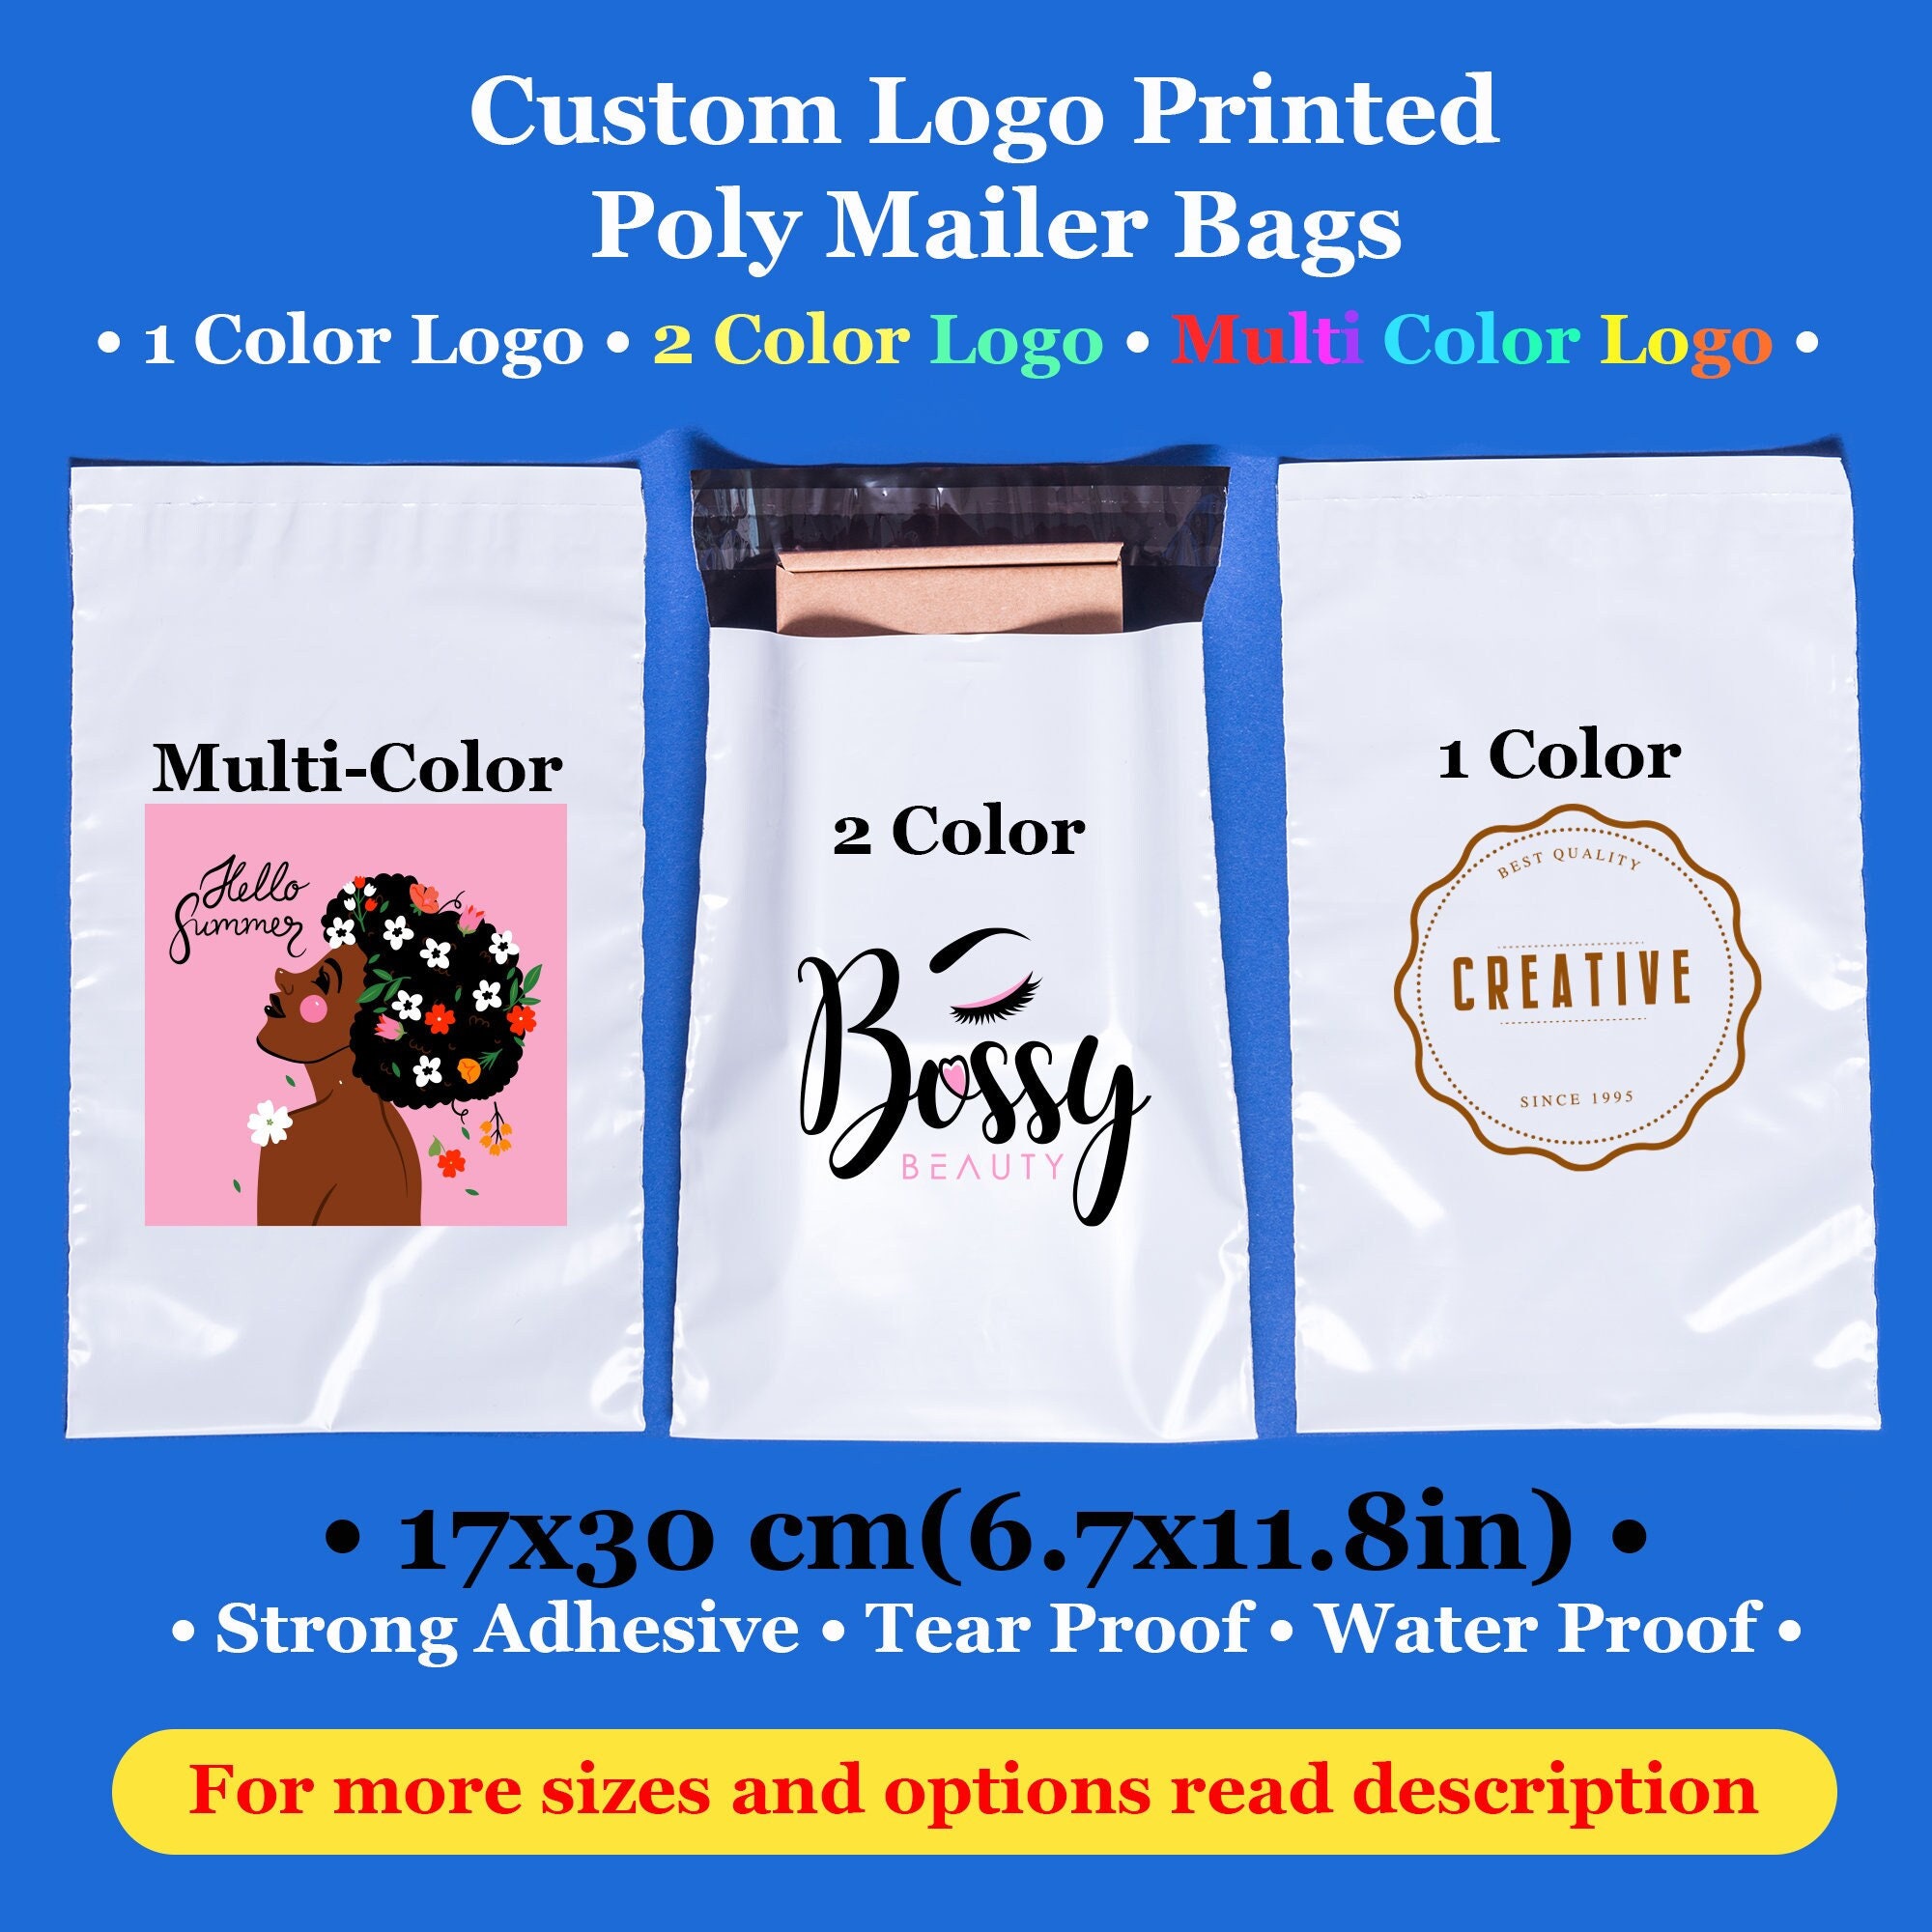 Custom Poly Mailers - Custom Printed Poly Mailers